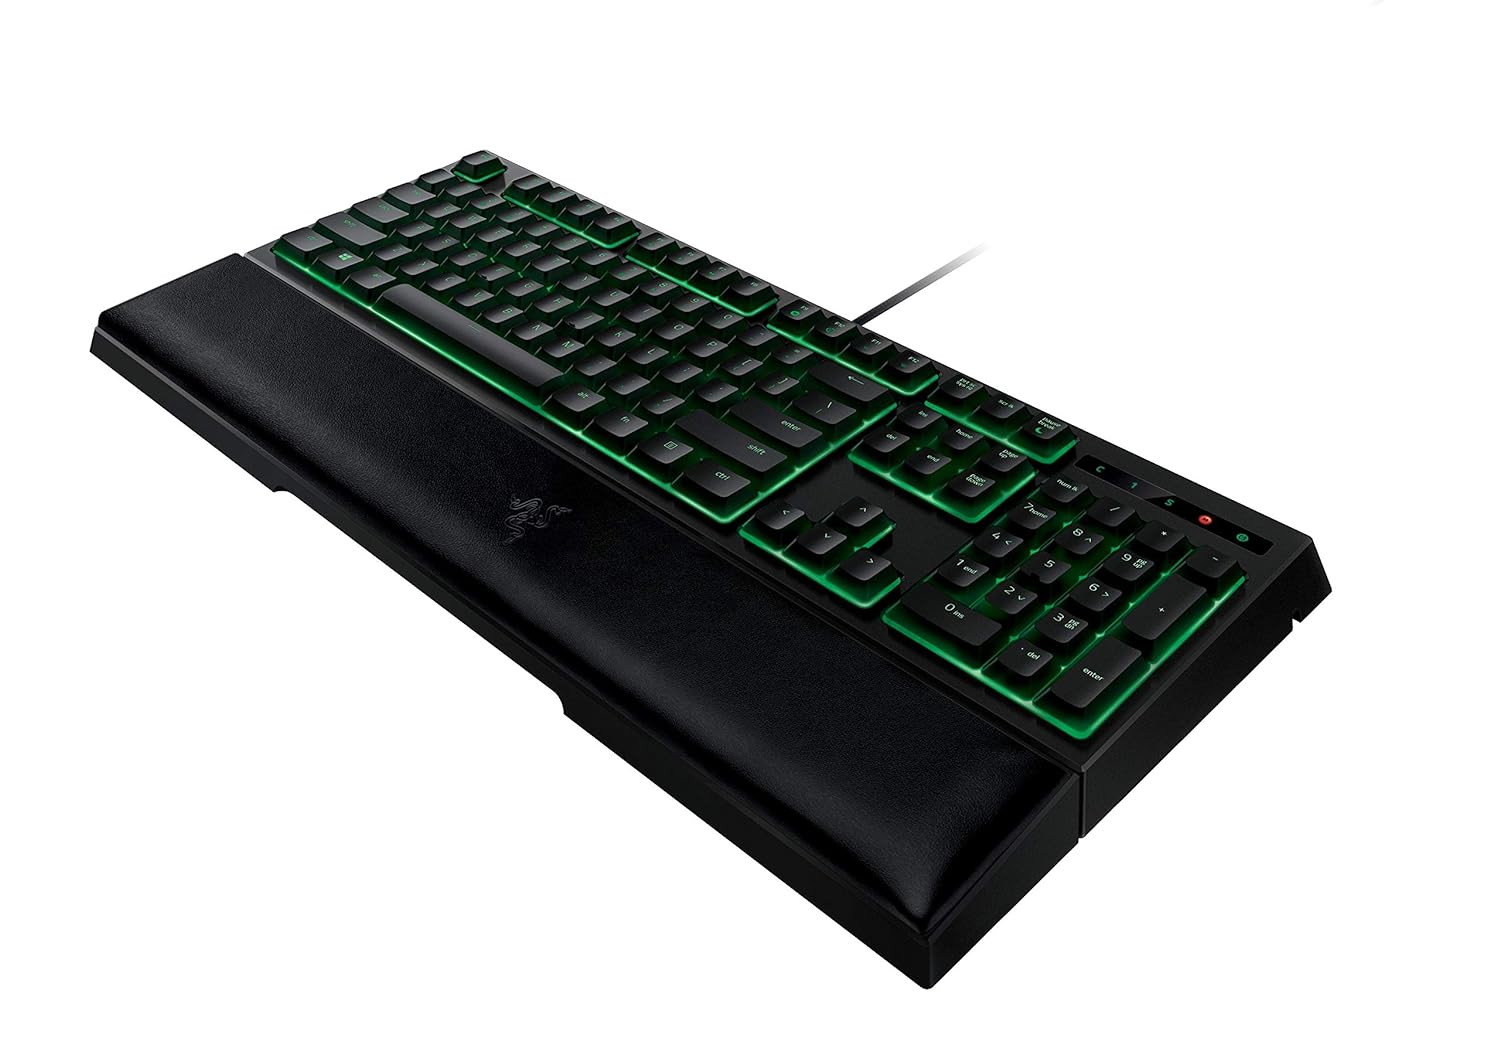 Razer Ornata Expert - Revolutionary Mecha-Membrane Gaming Keyboard with Mid-Height Keycaps - Ergonomic Design